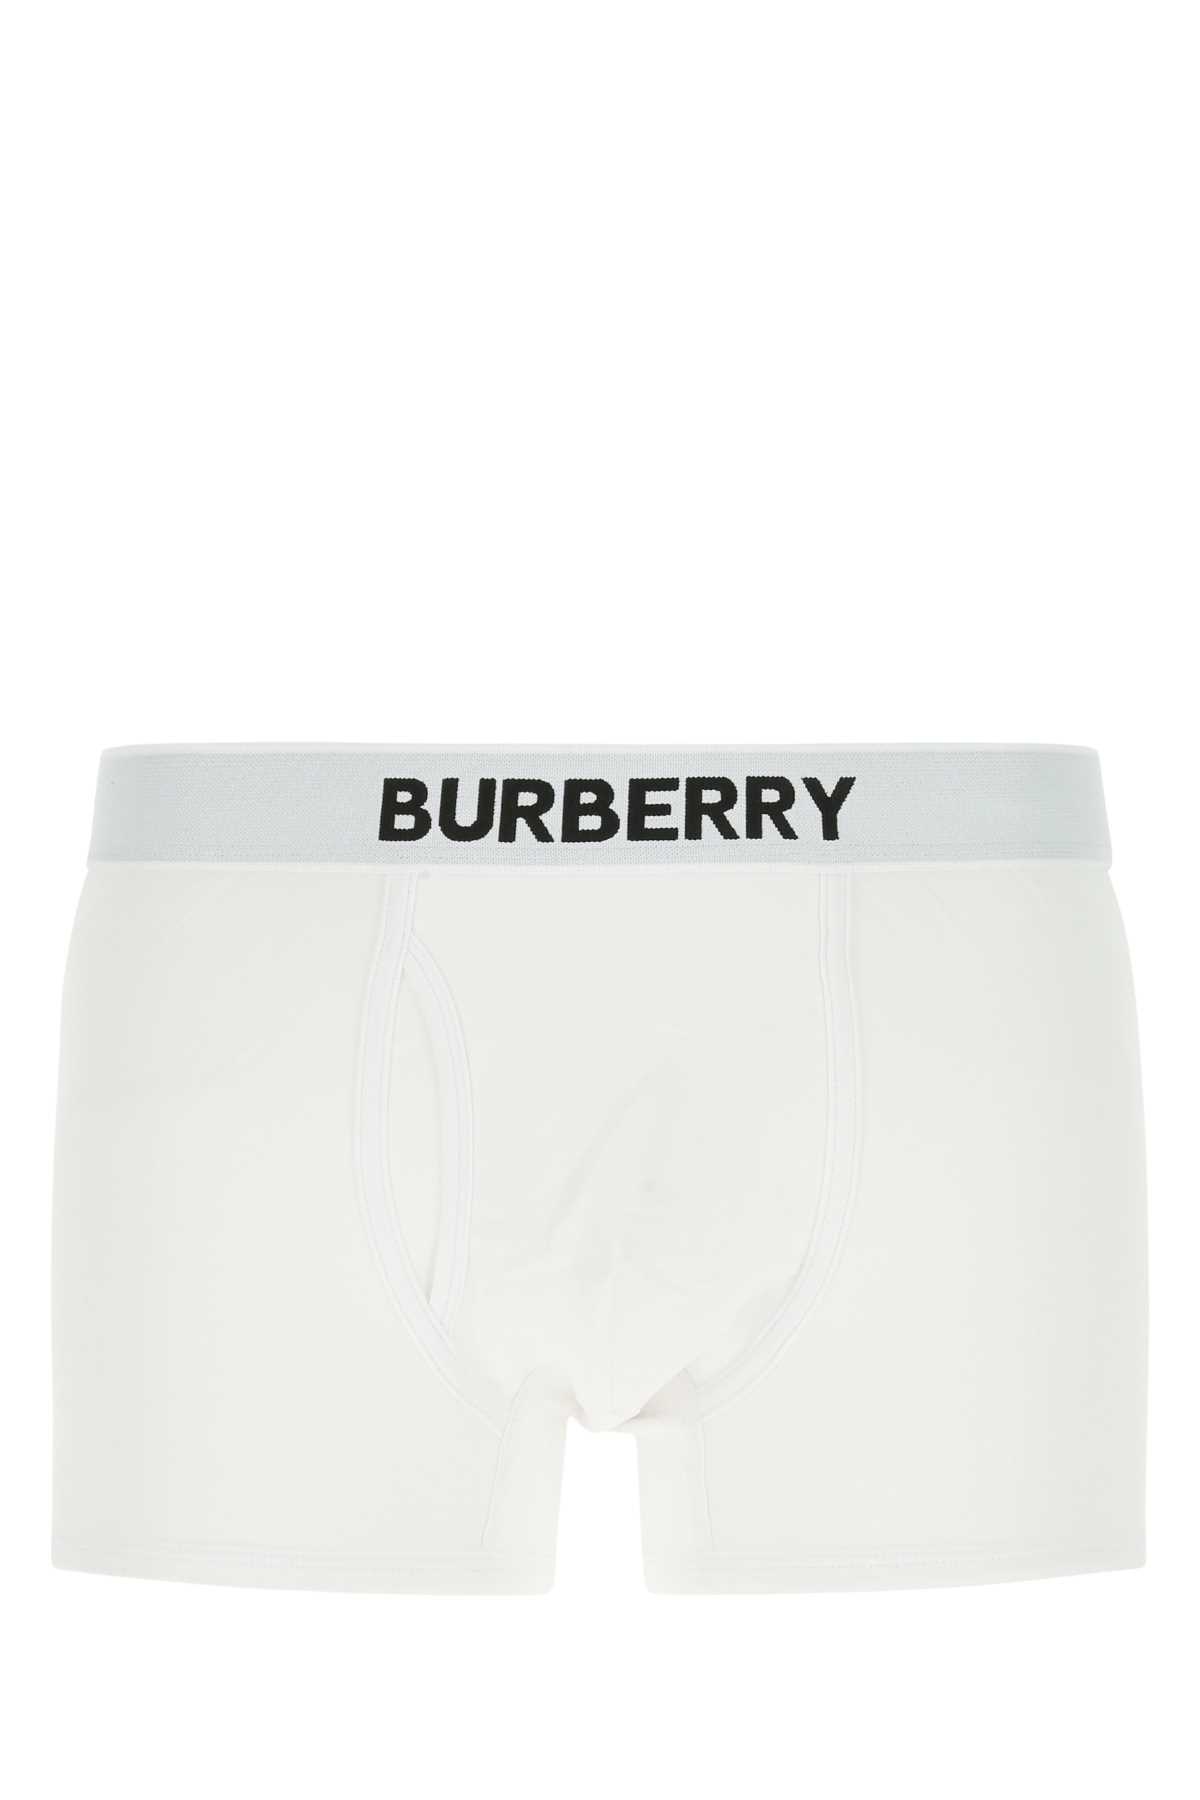 Shop Burberry White Stretch Cotton Boxer